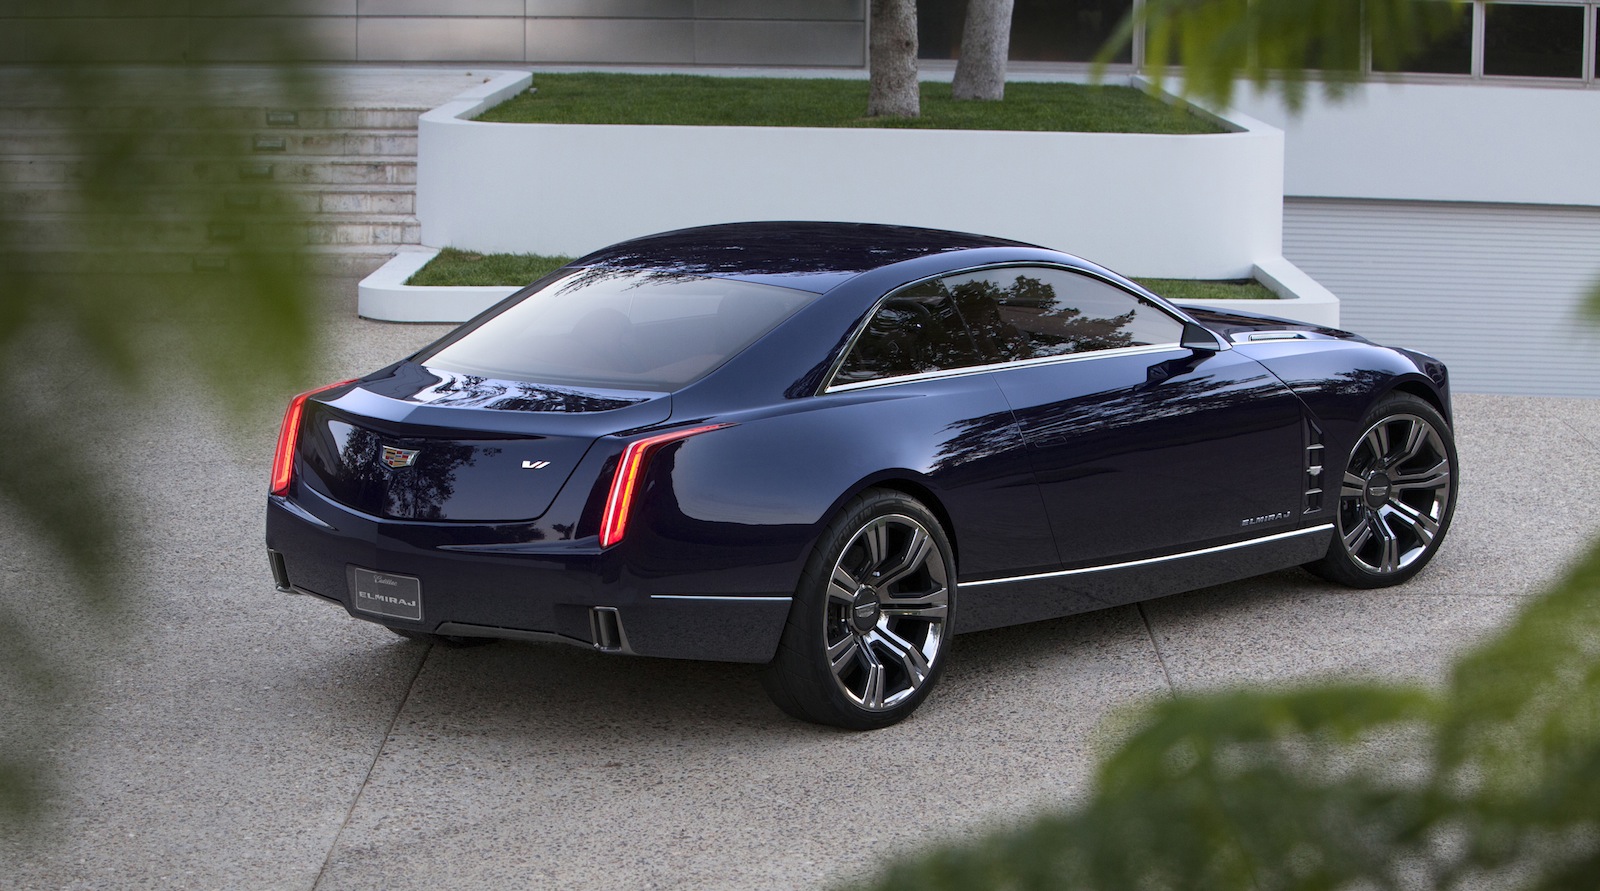 Cadillac Elmiraj sports coupe concept shows future luxury design